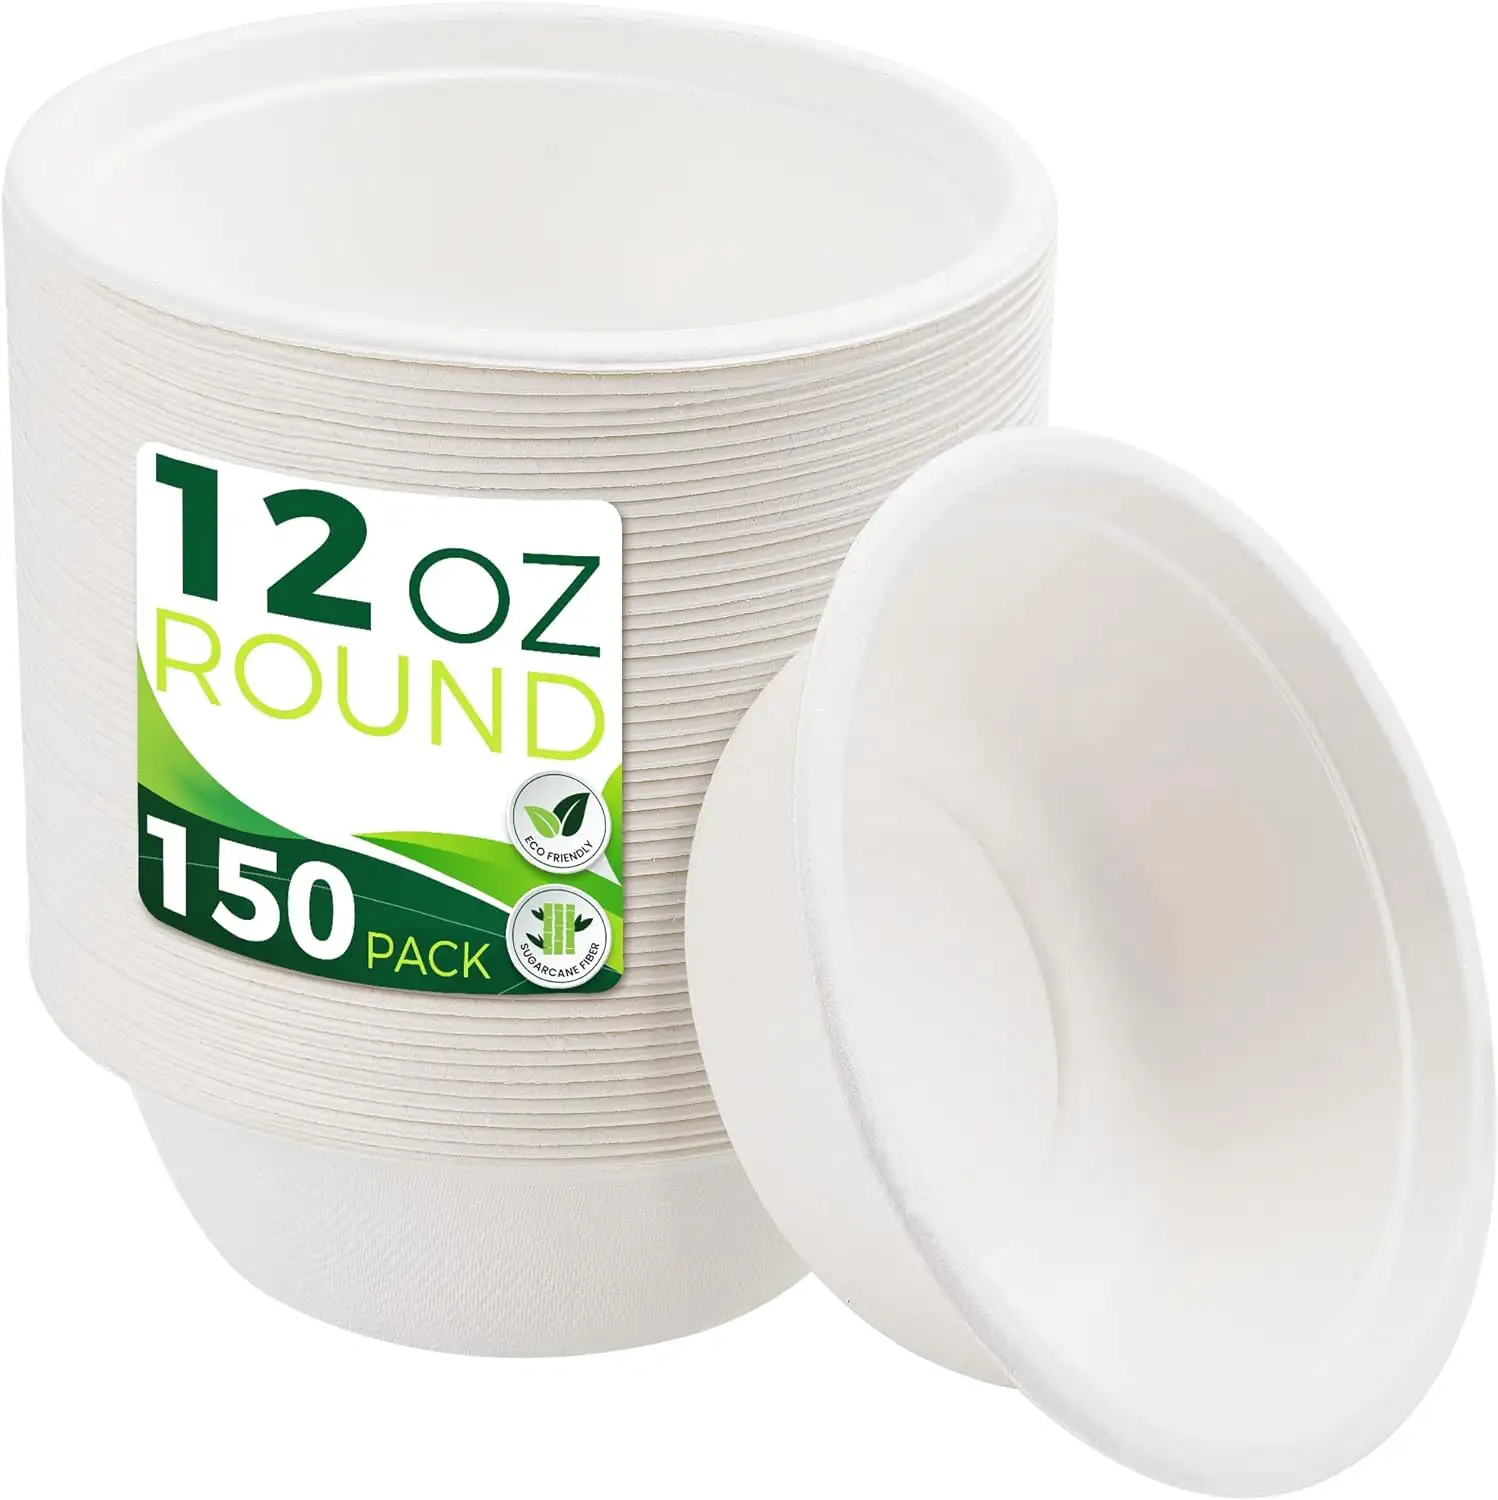 Party BBQ 12 oz Paper Bowls White Eco BPA Free Sugarcane Bagasse Biodegradable Disposable Paper Bowls